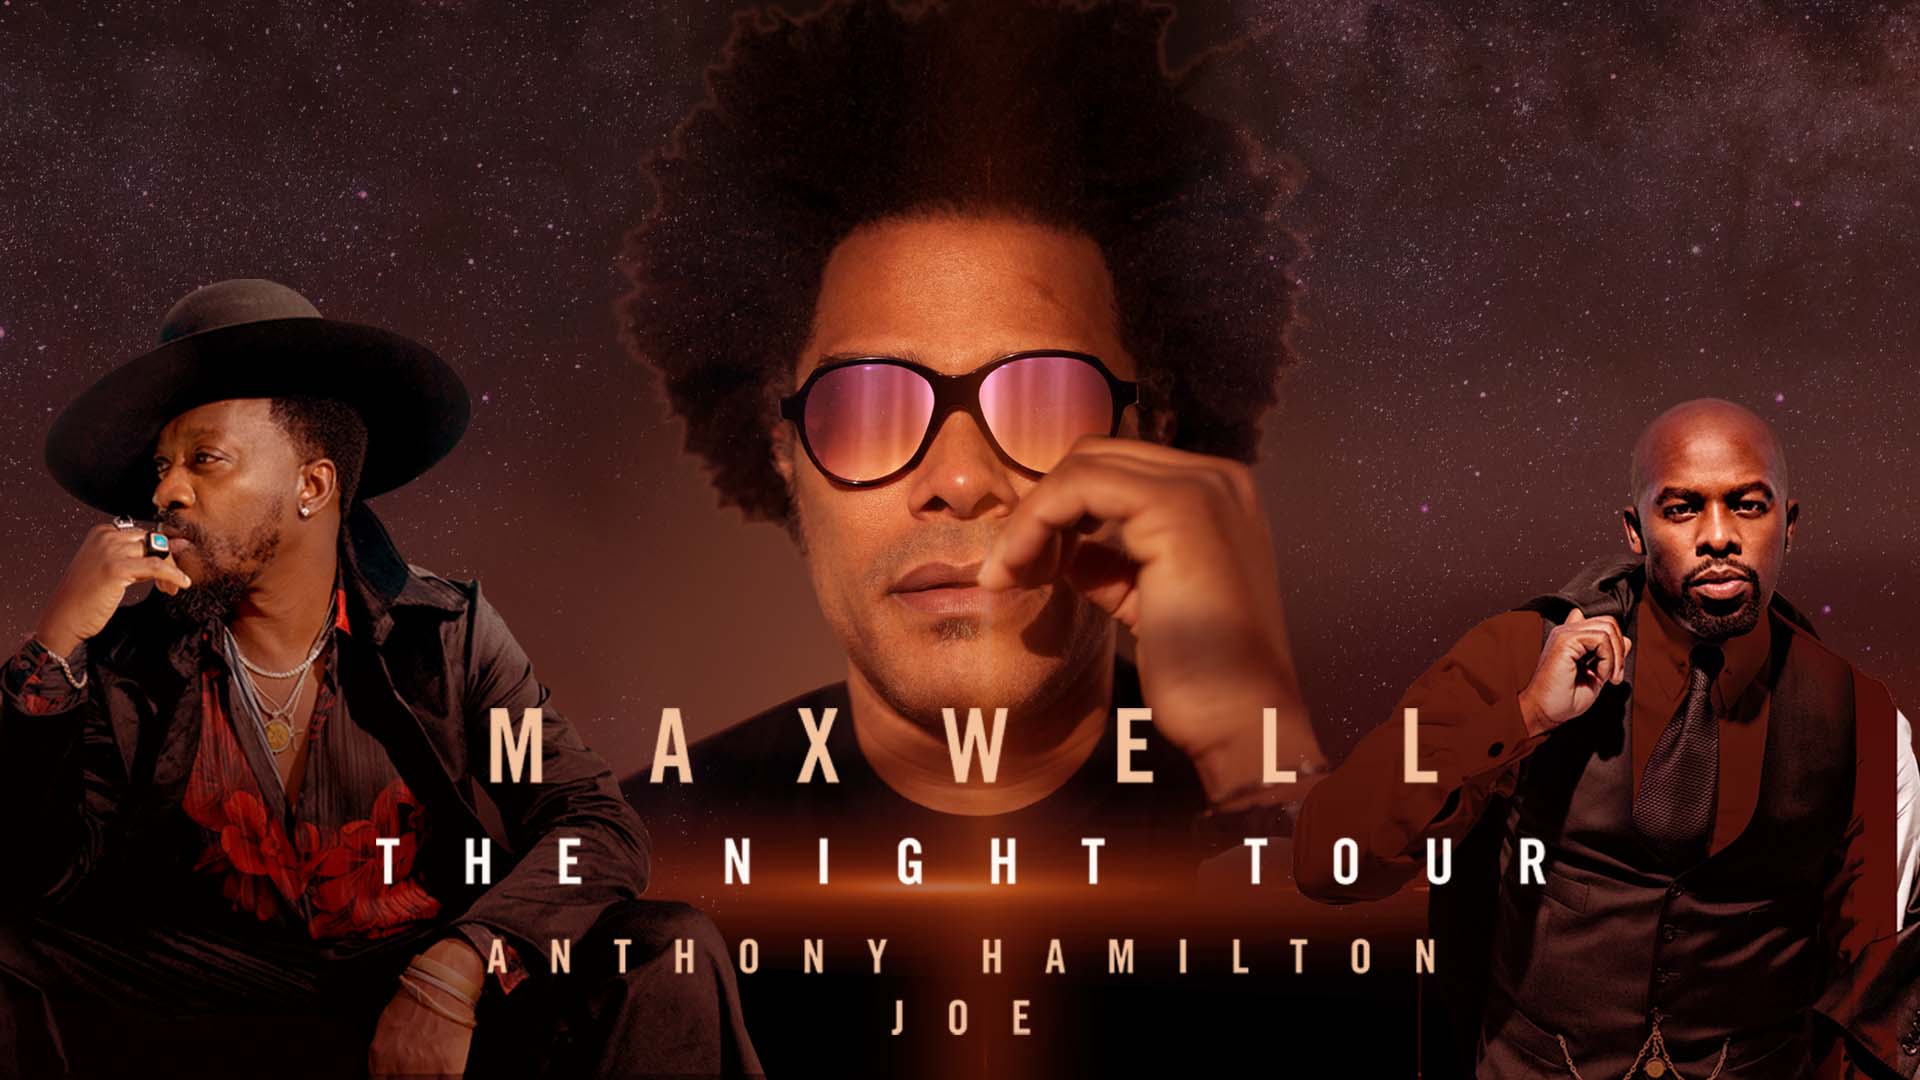 BPC Presents "MAXWELL - The Night Tour w/ Anthony Hamilton & Joe"